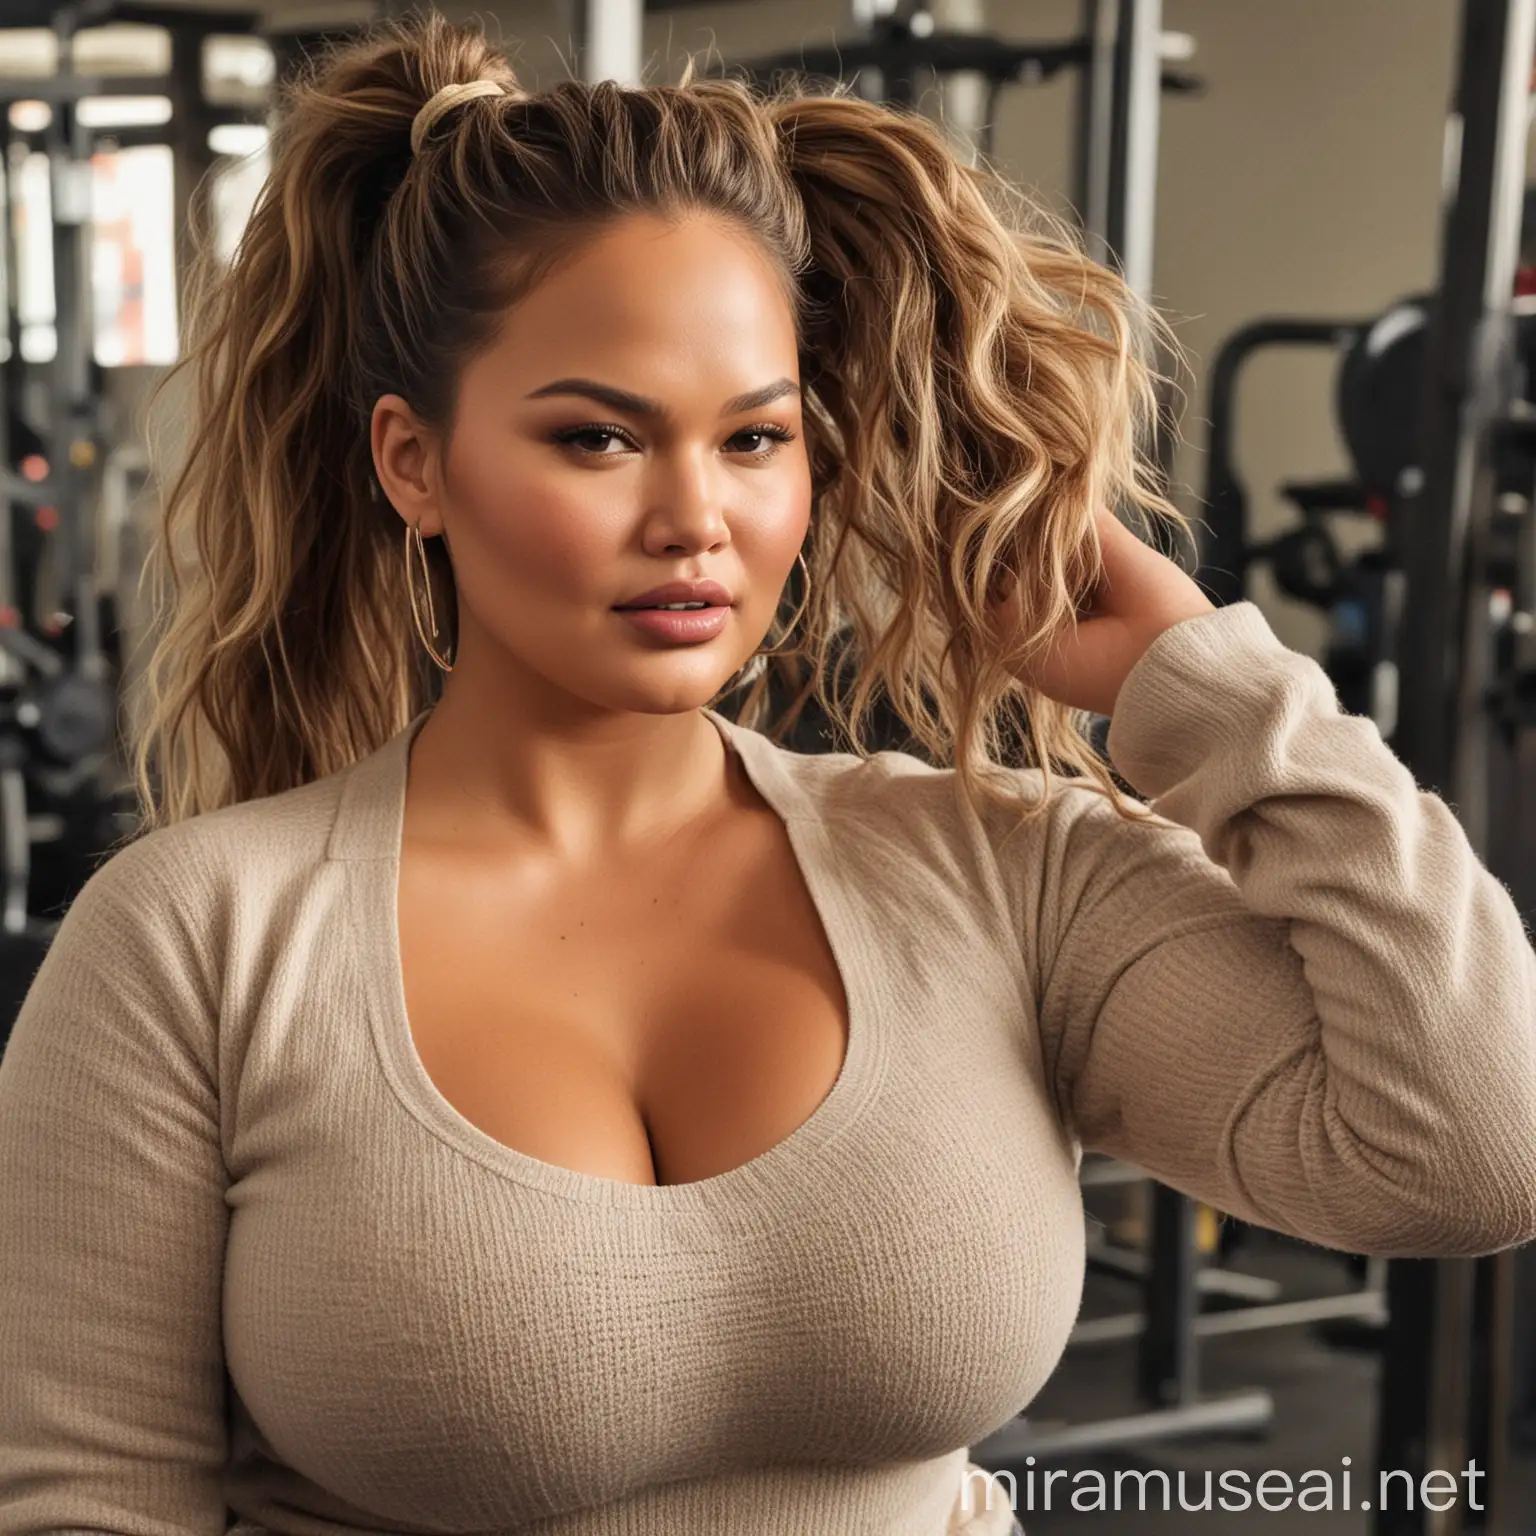 Chrissy Teigen Sweater Gym Workout Busty Celebrity Fitness Session